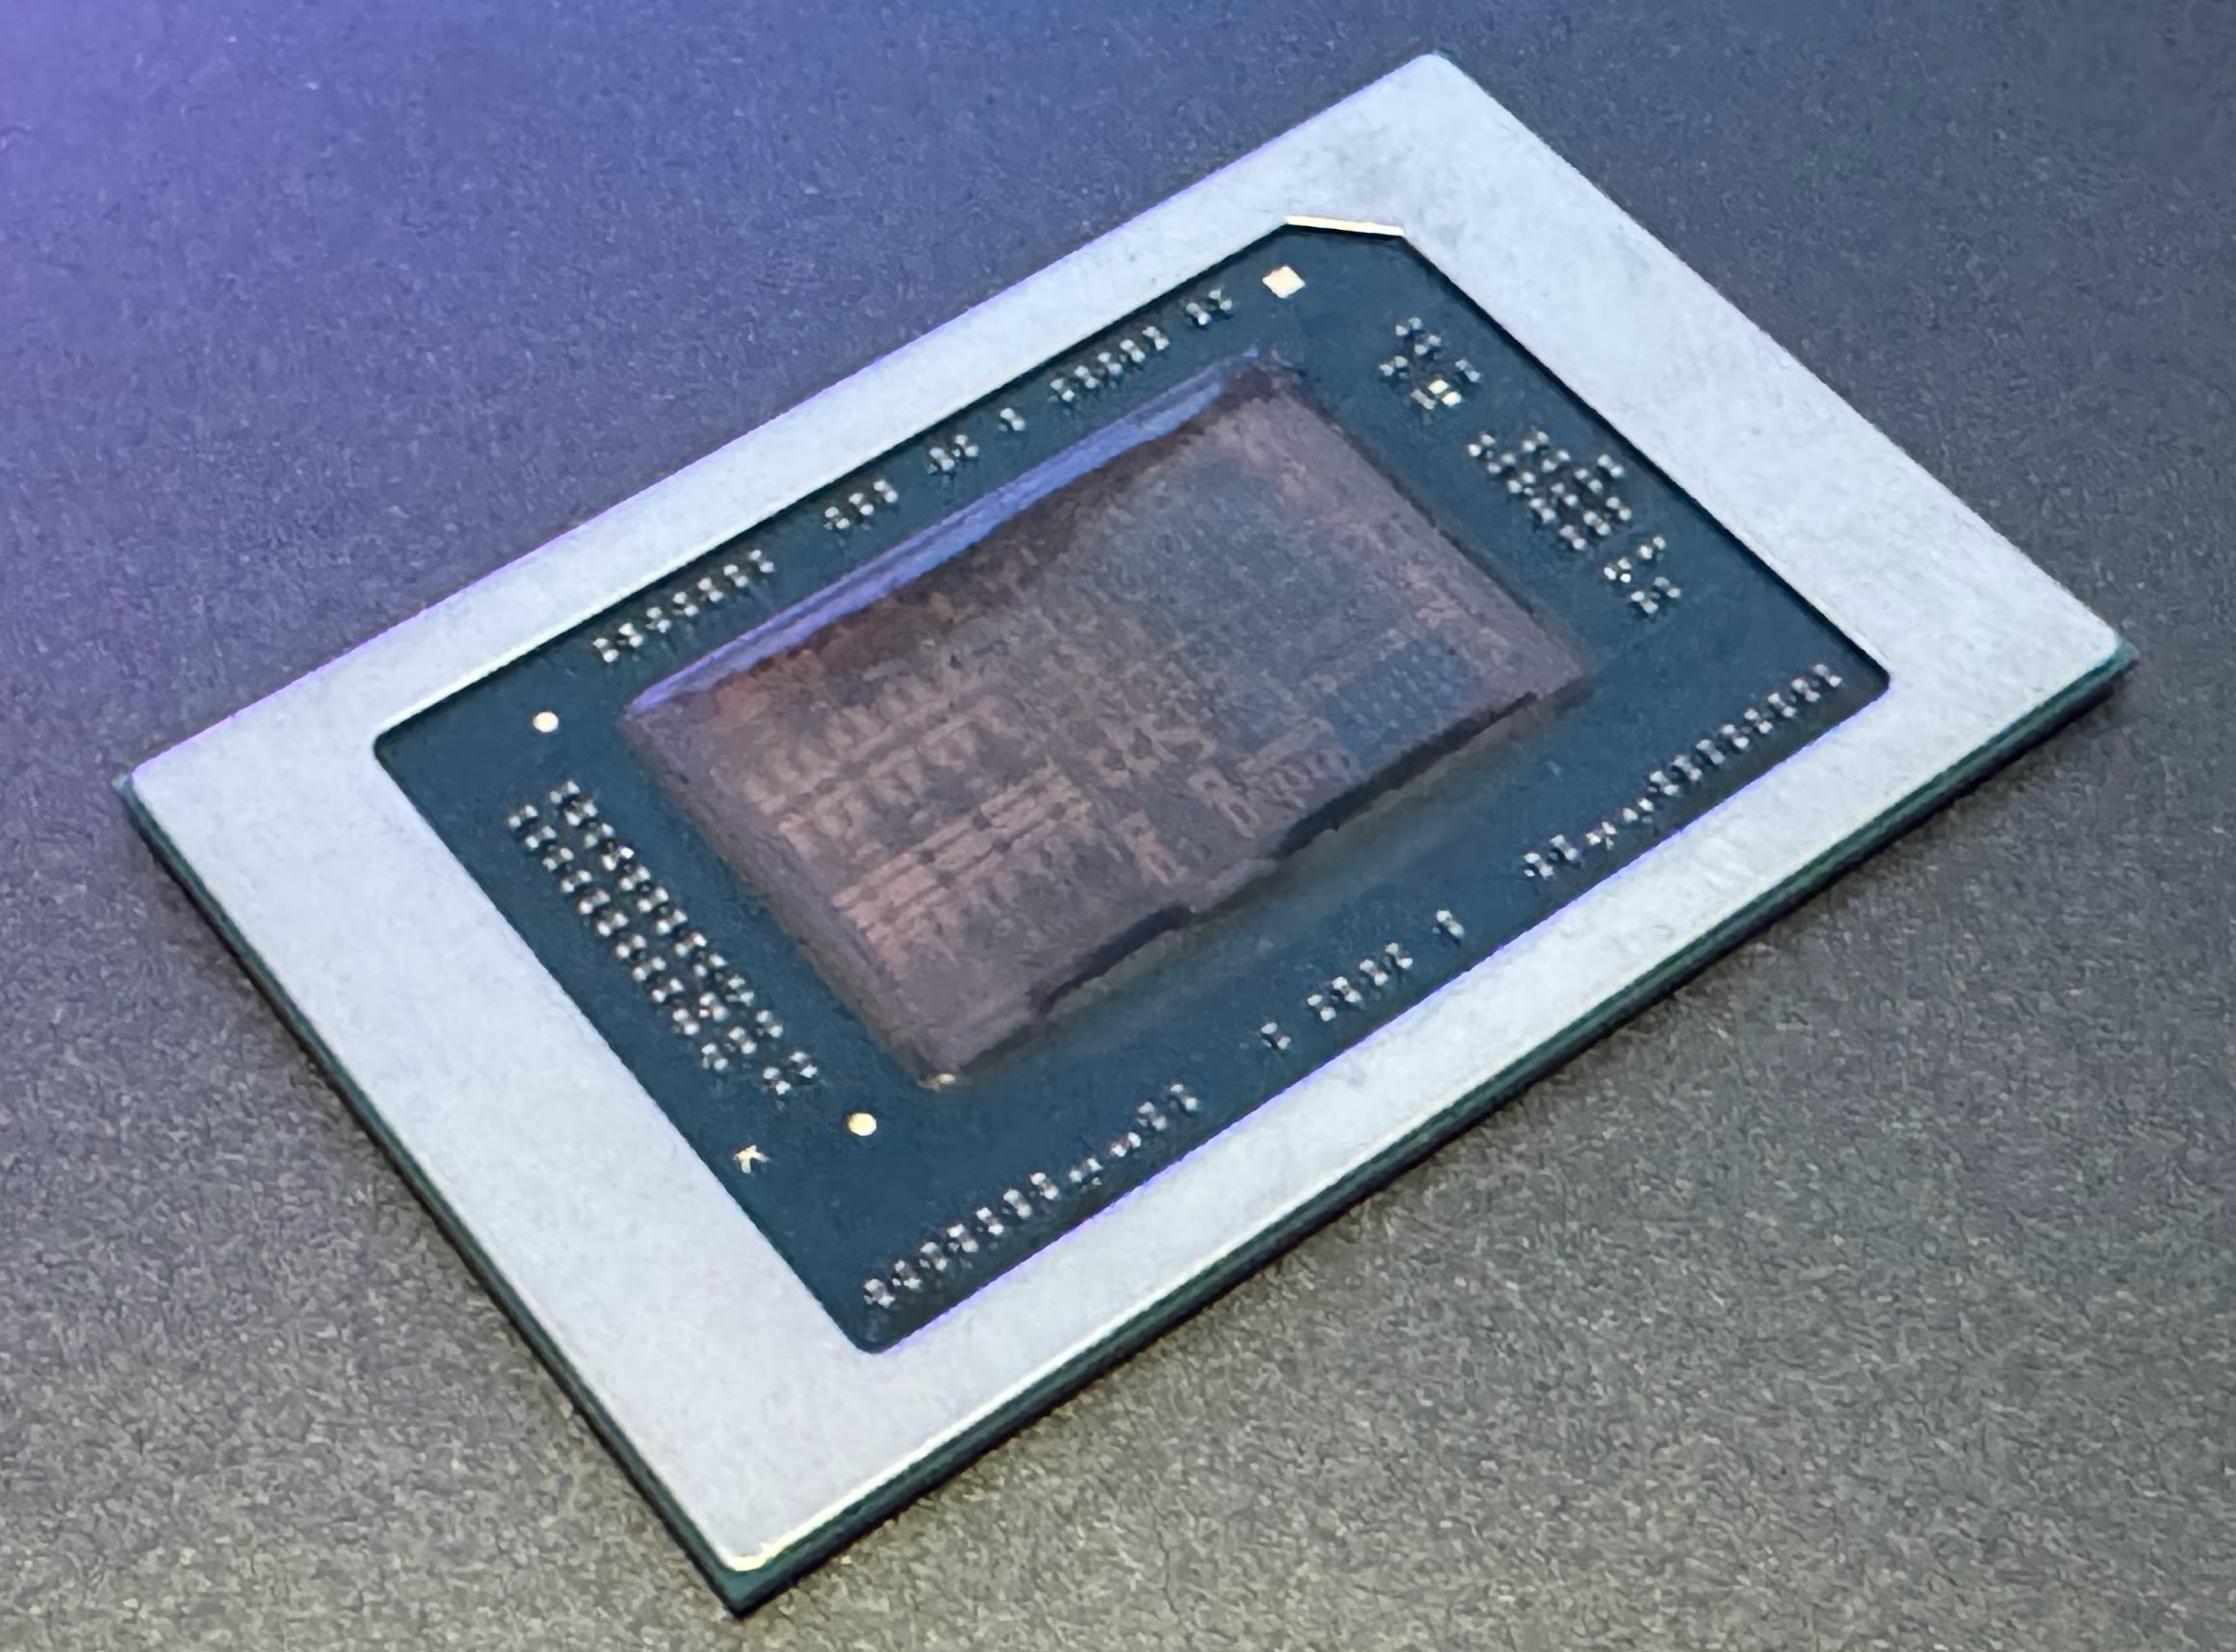 AMD Ryzen AI 300 series introduced